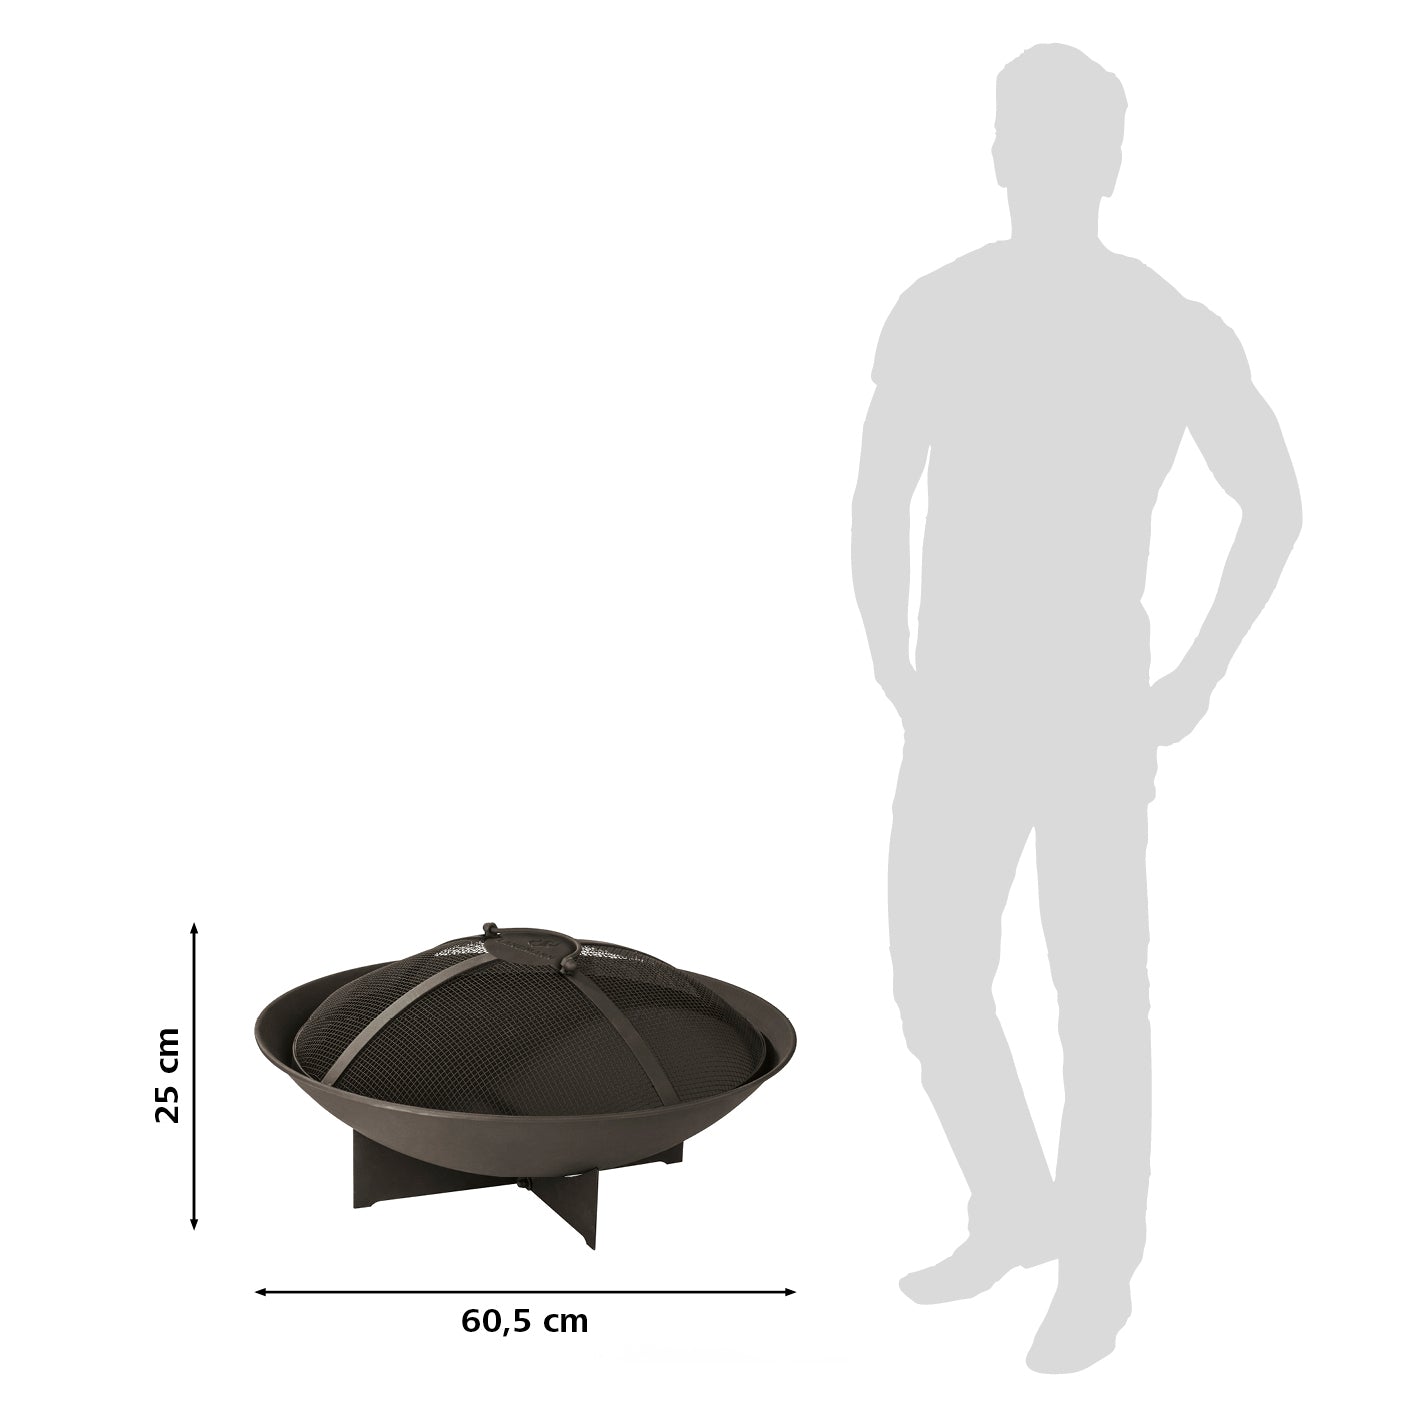 Feuerkorb - 60,5 cm - schwarz